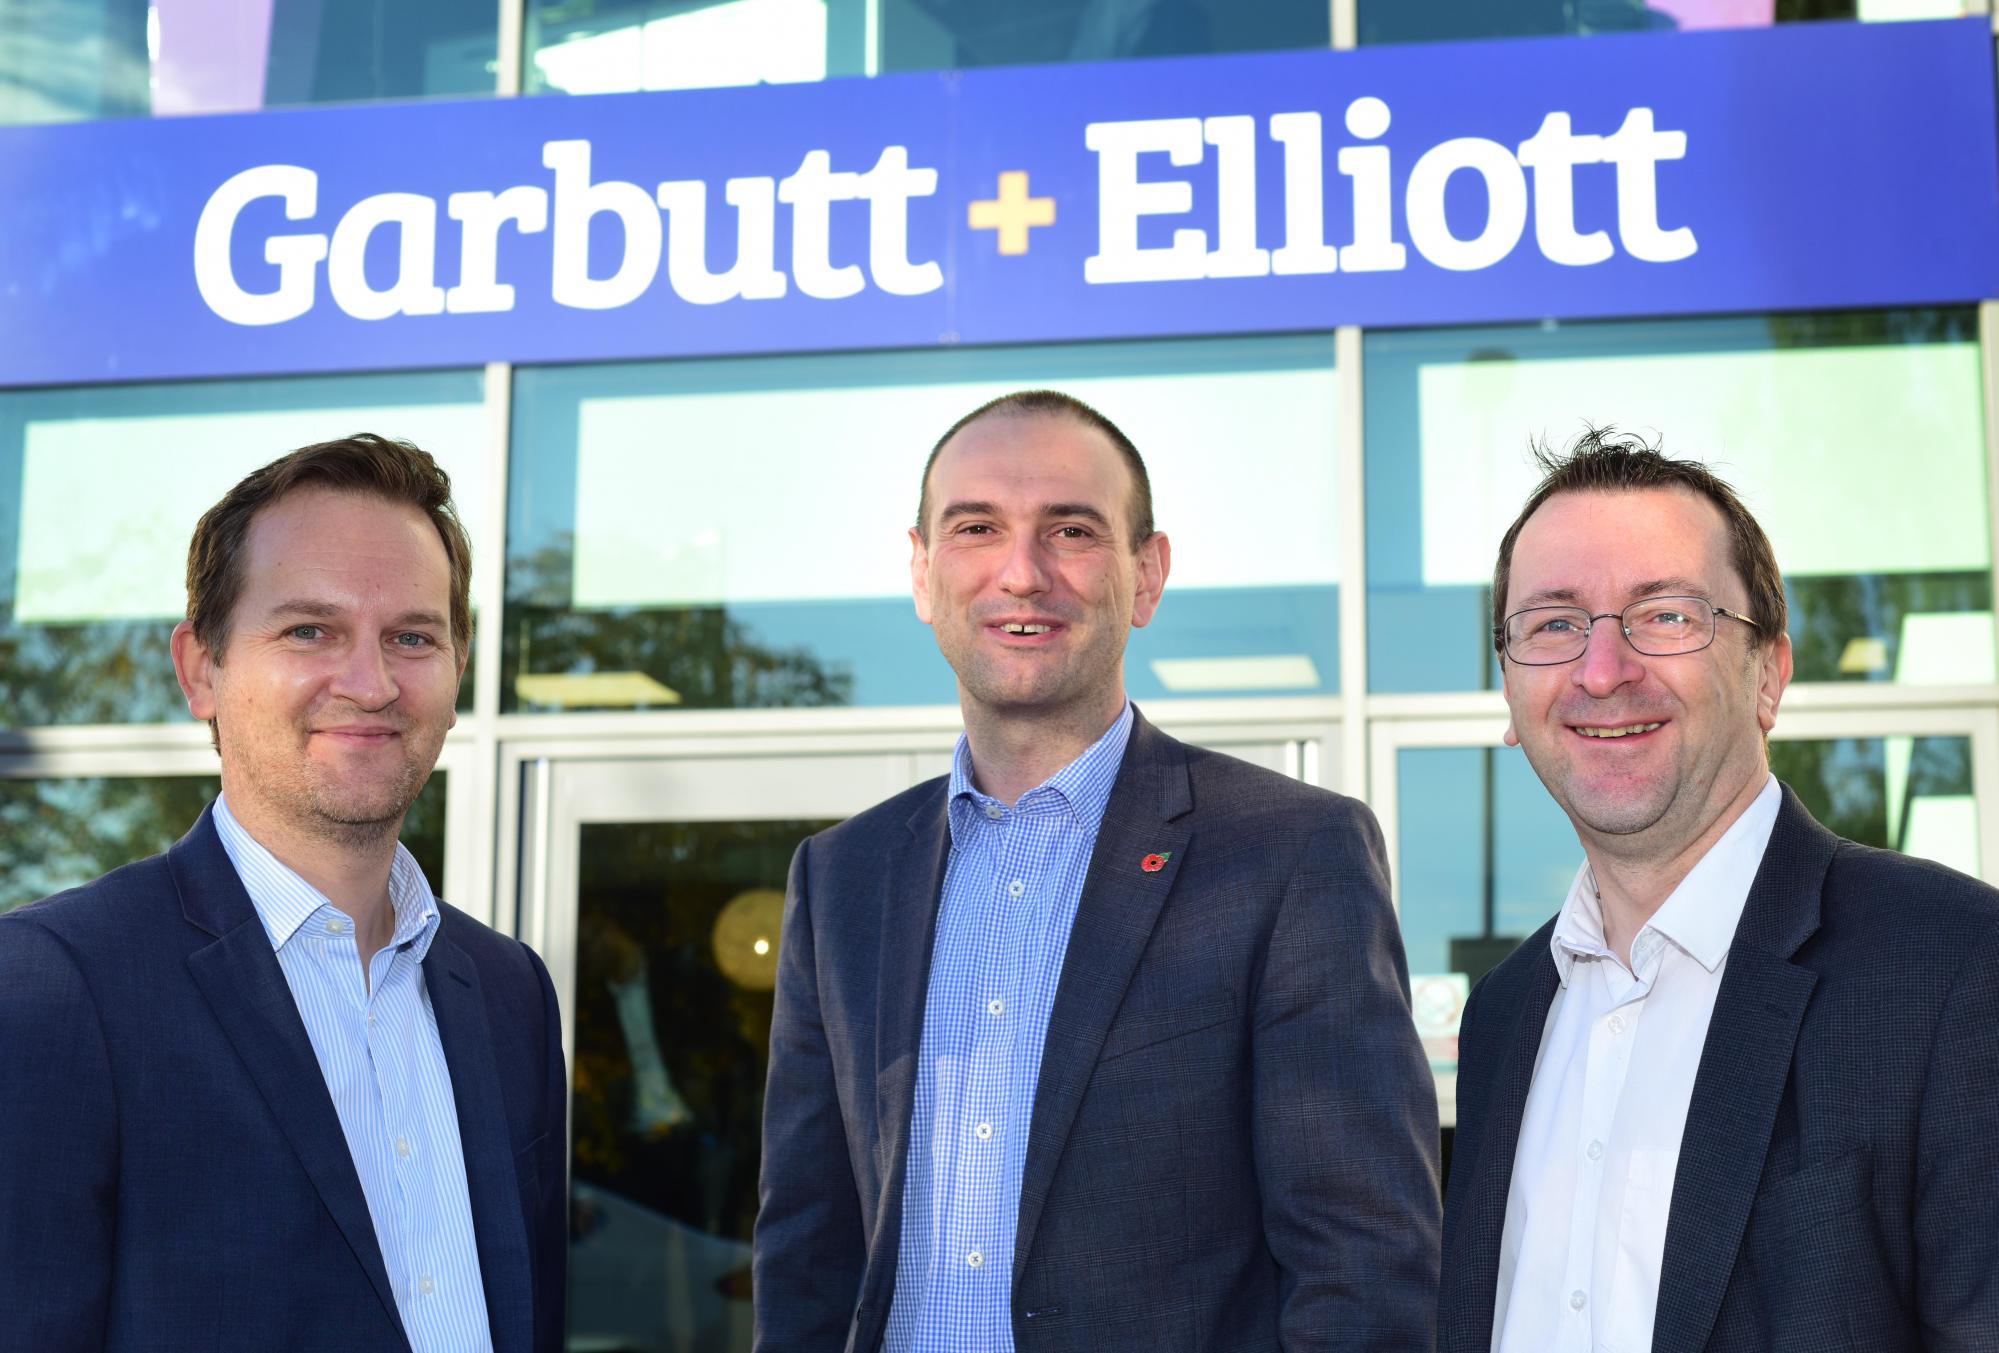 Garbutt and Elliott budget predictions for autumn 2018